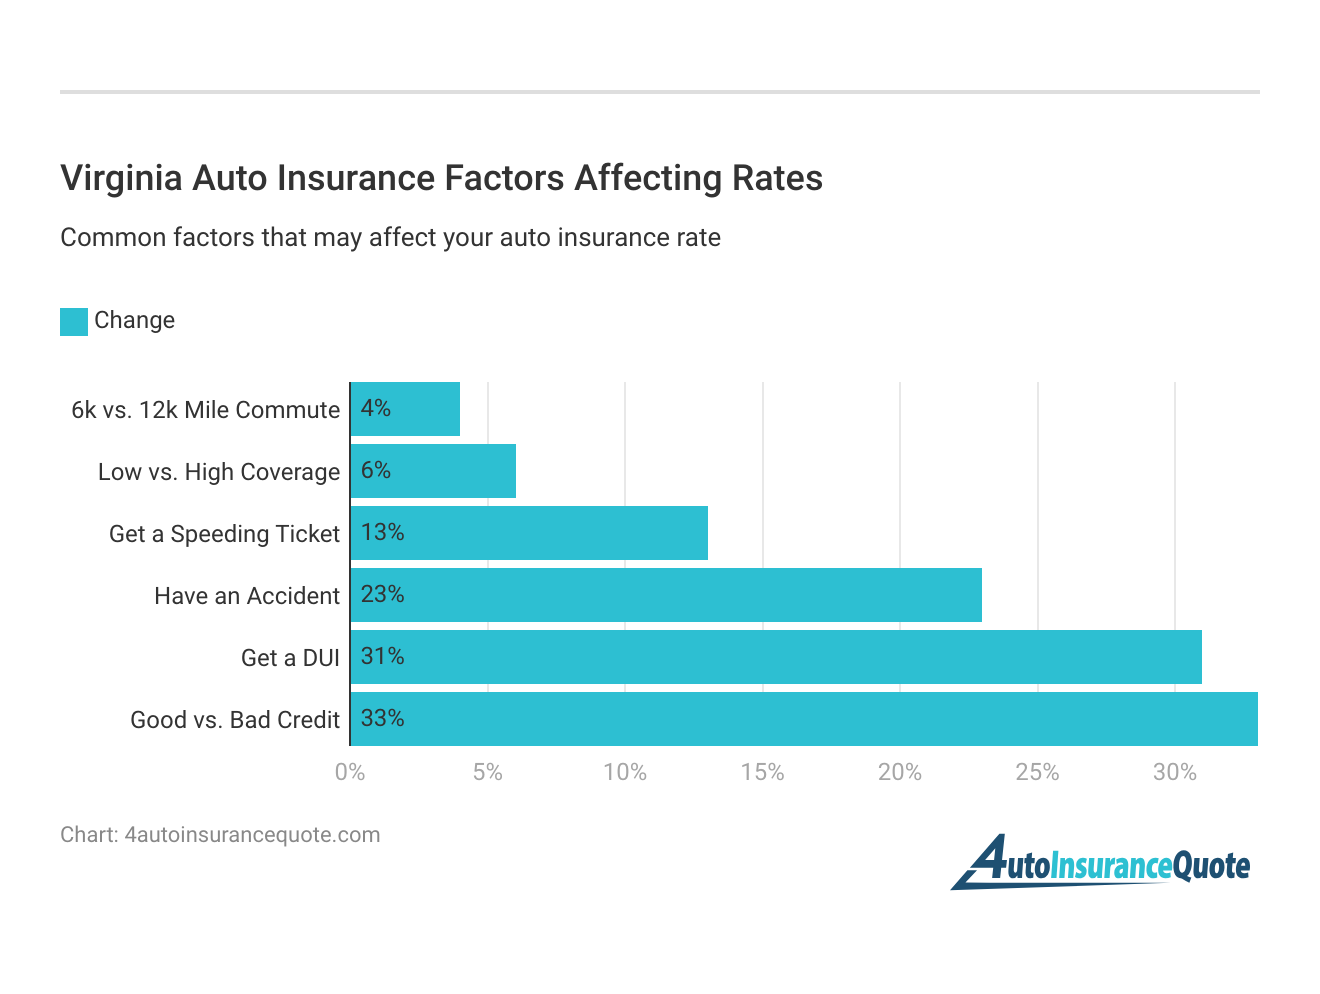 <h3>Virginia Auto Insurance Factors Affecting Rates</h3>